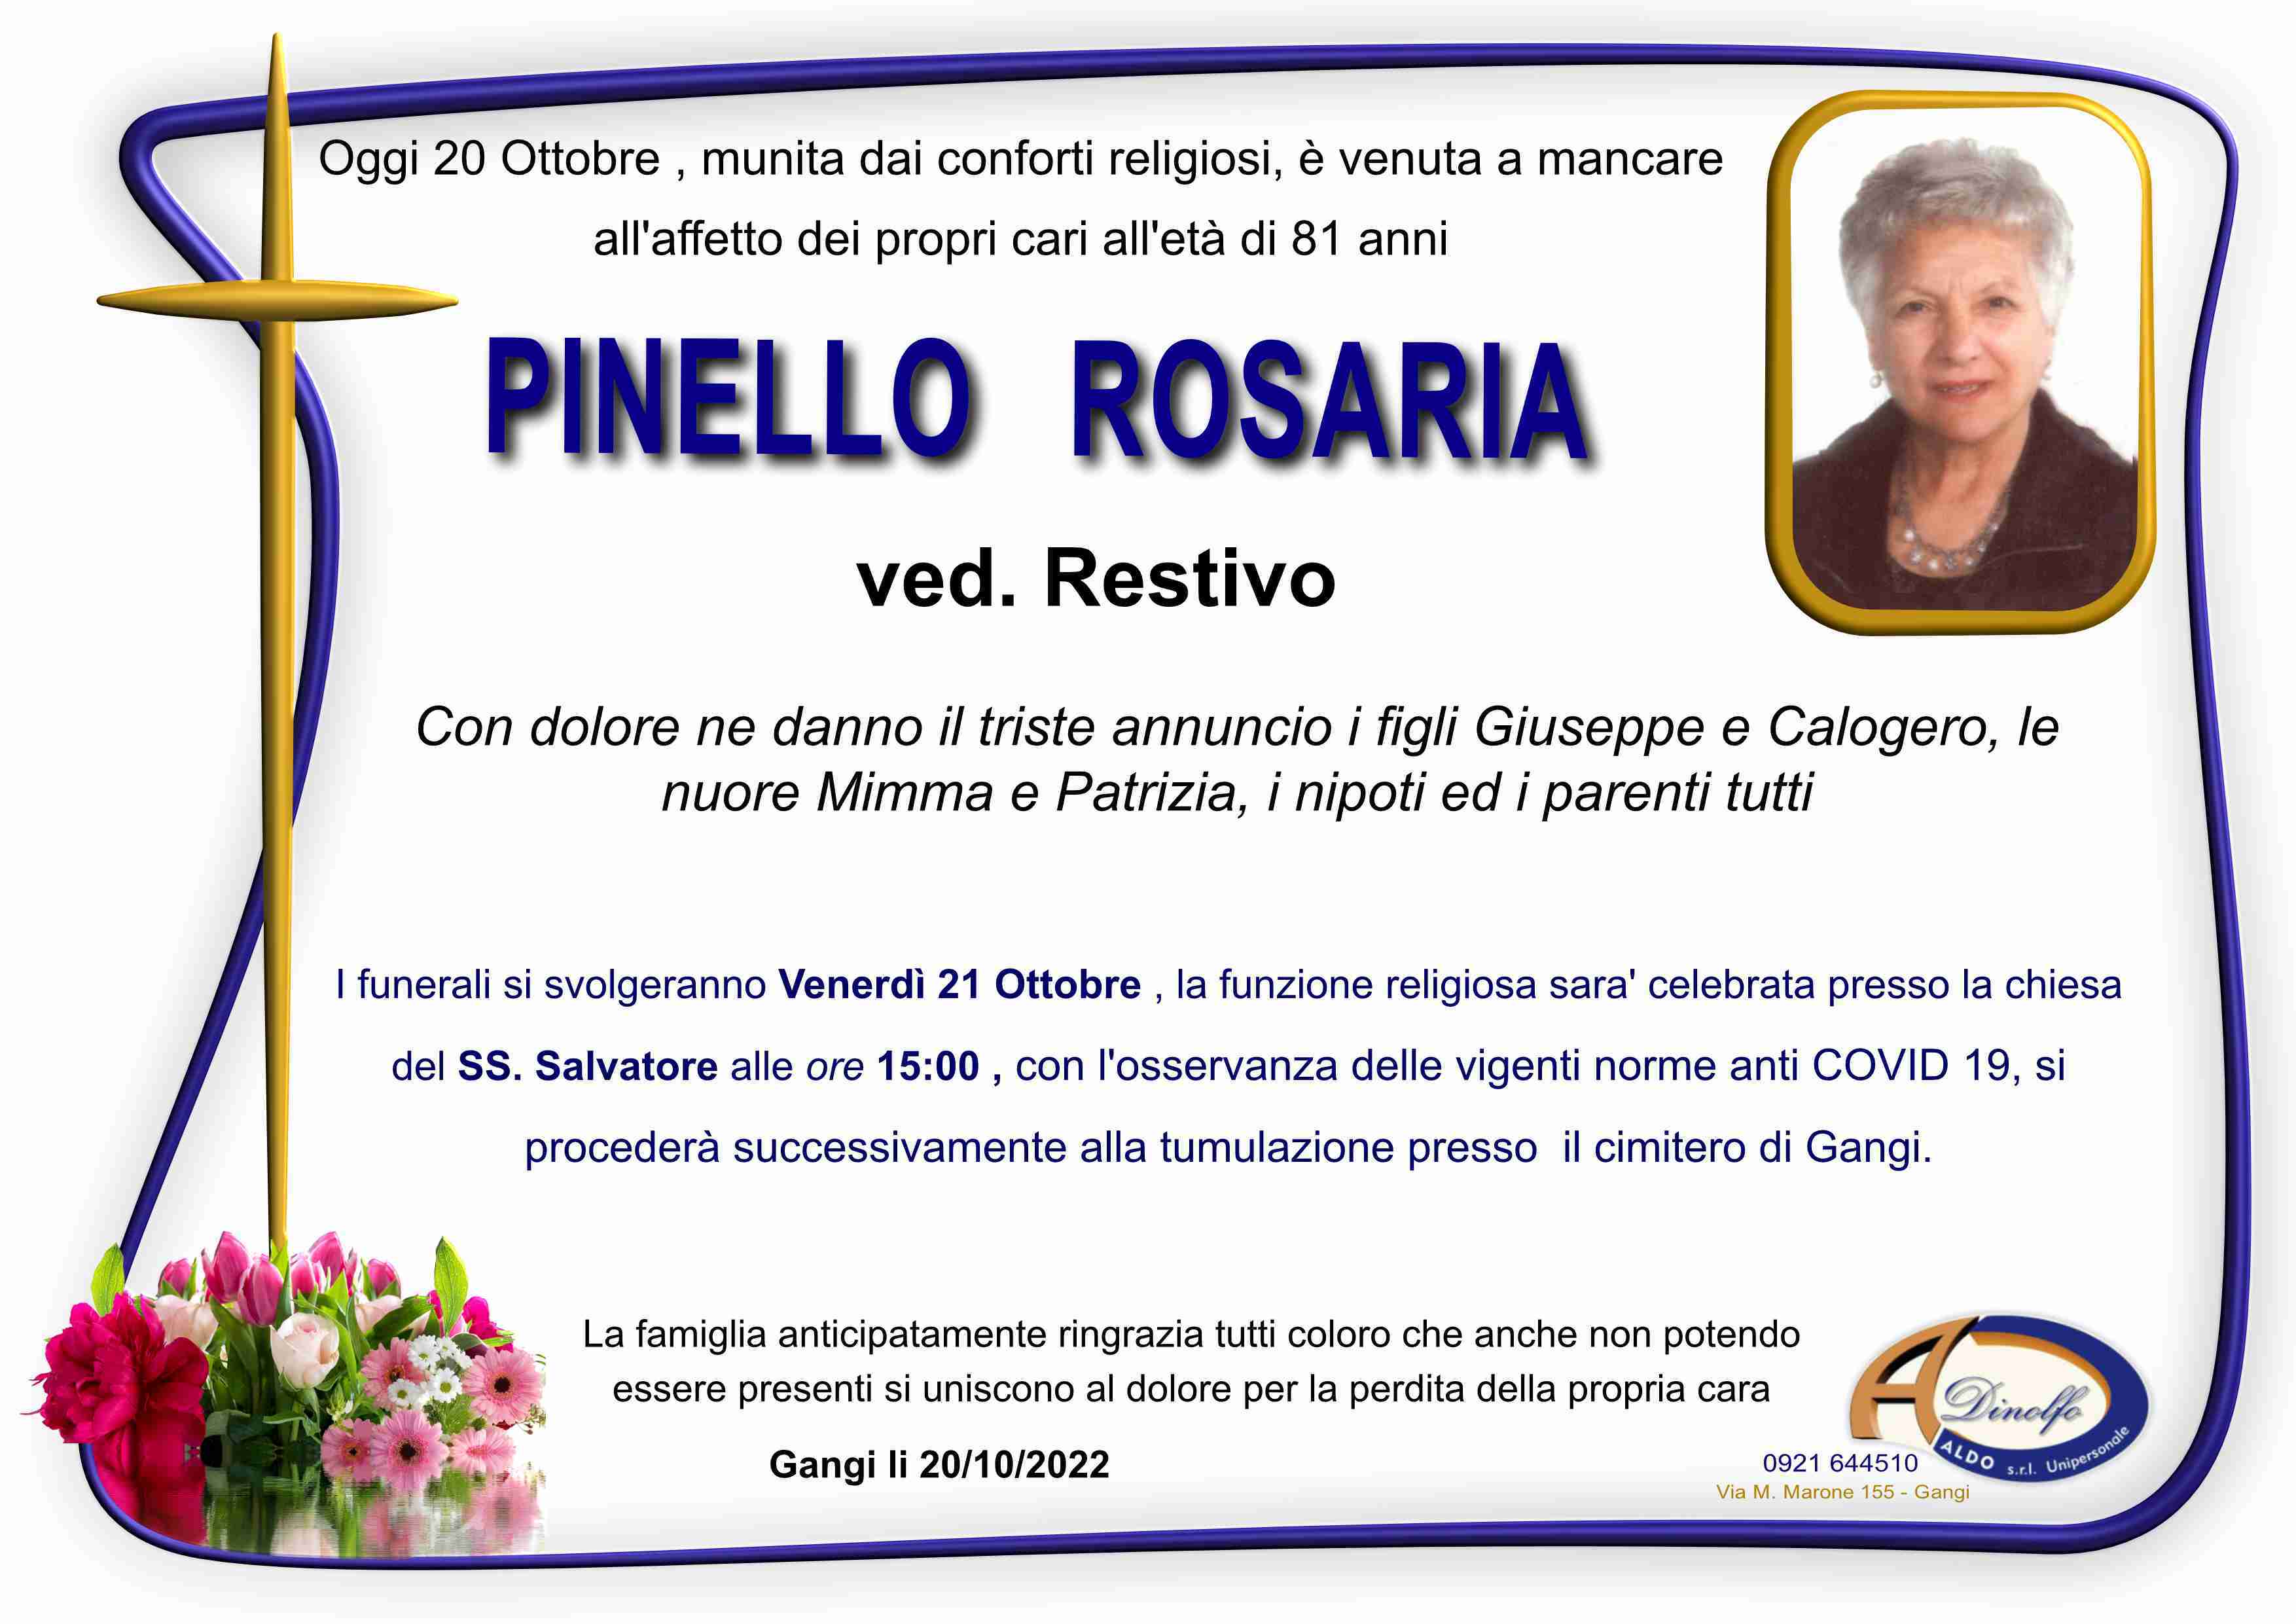 Rosaria Pinello